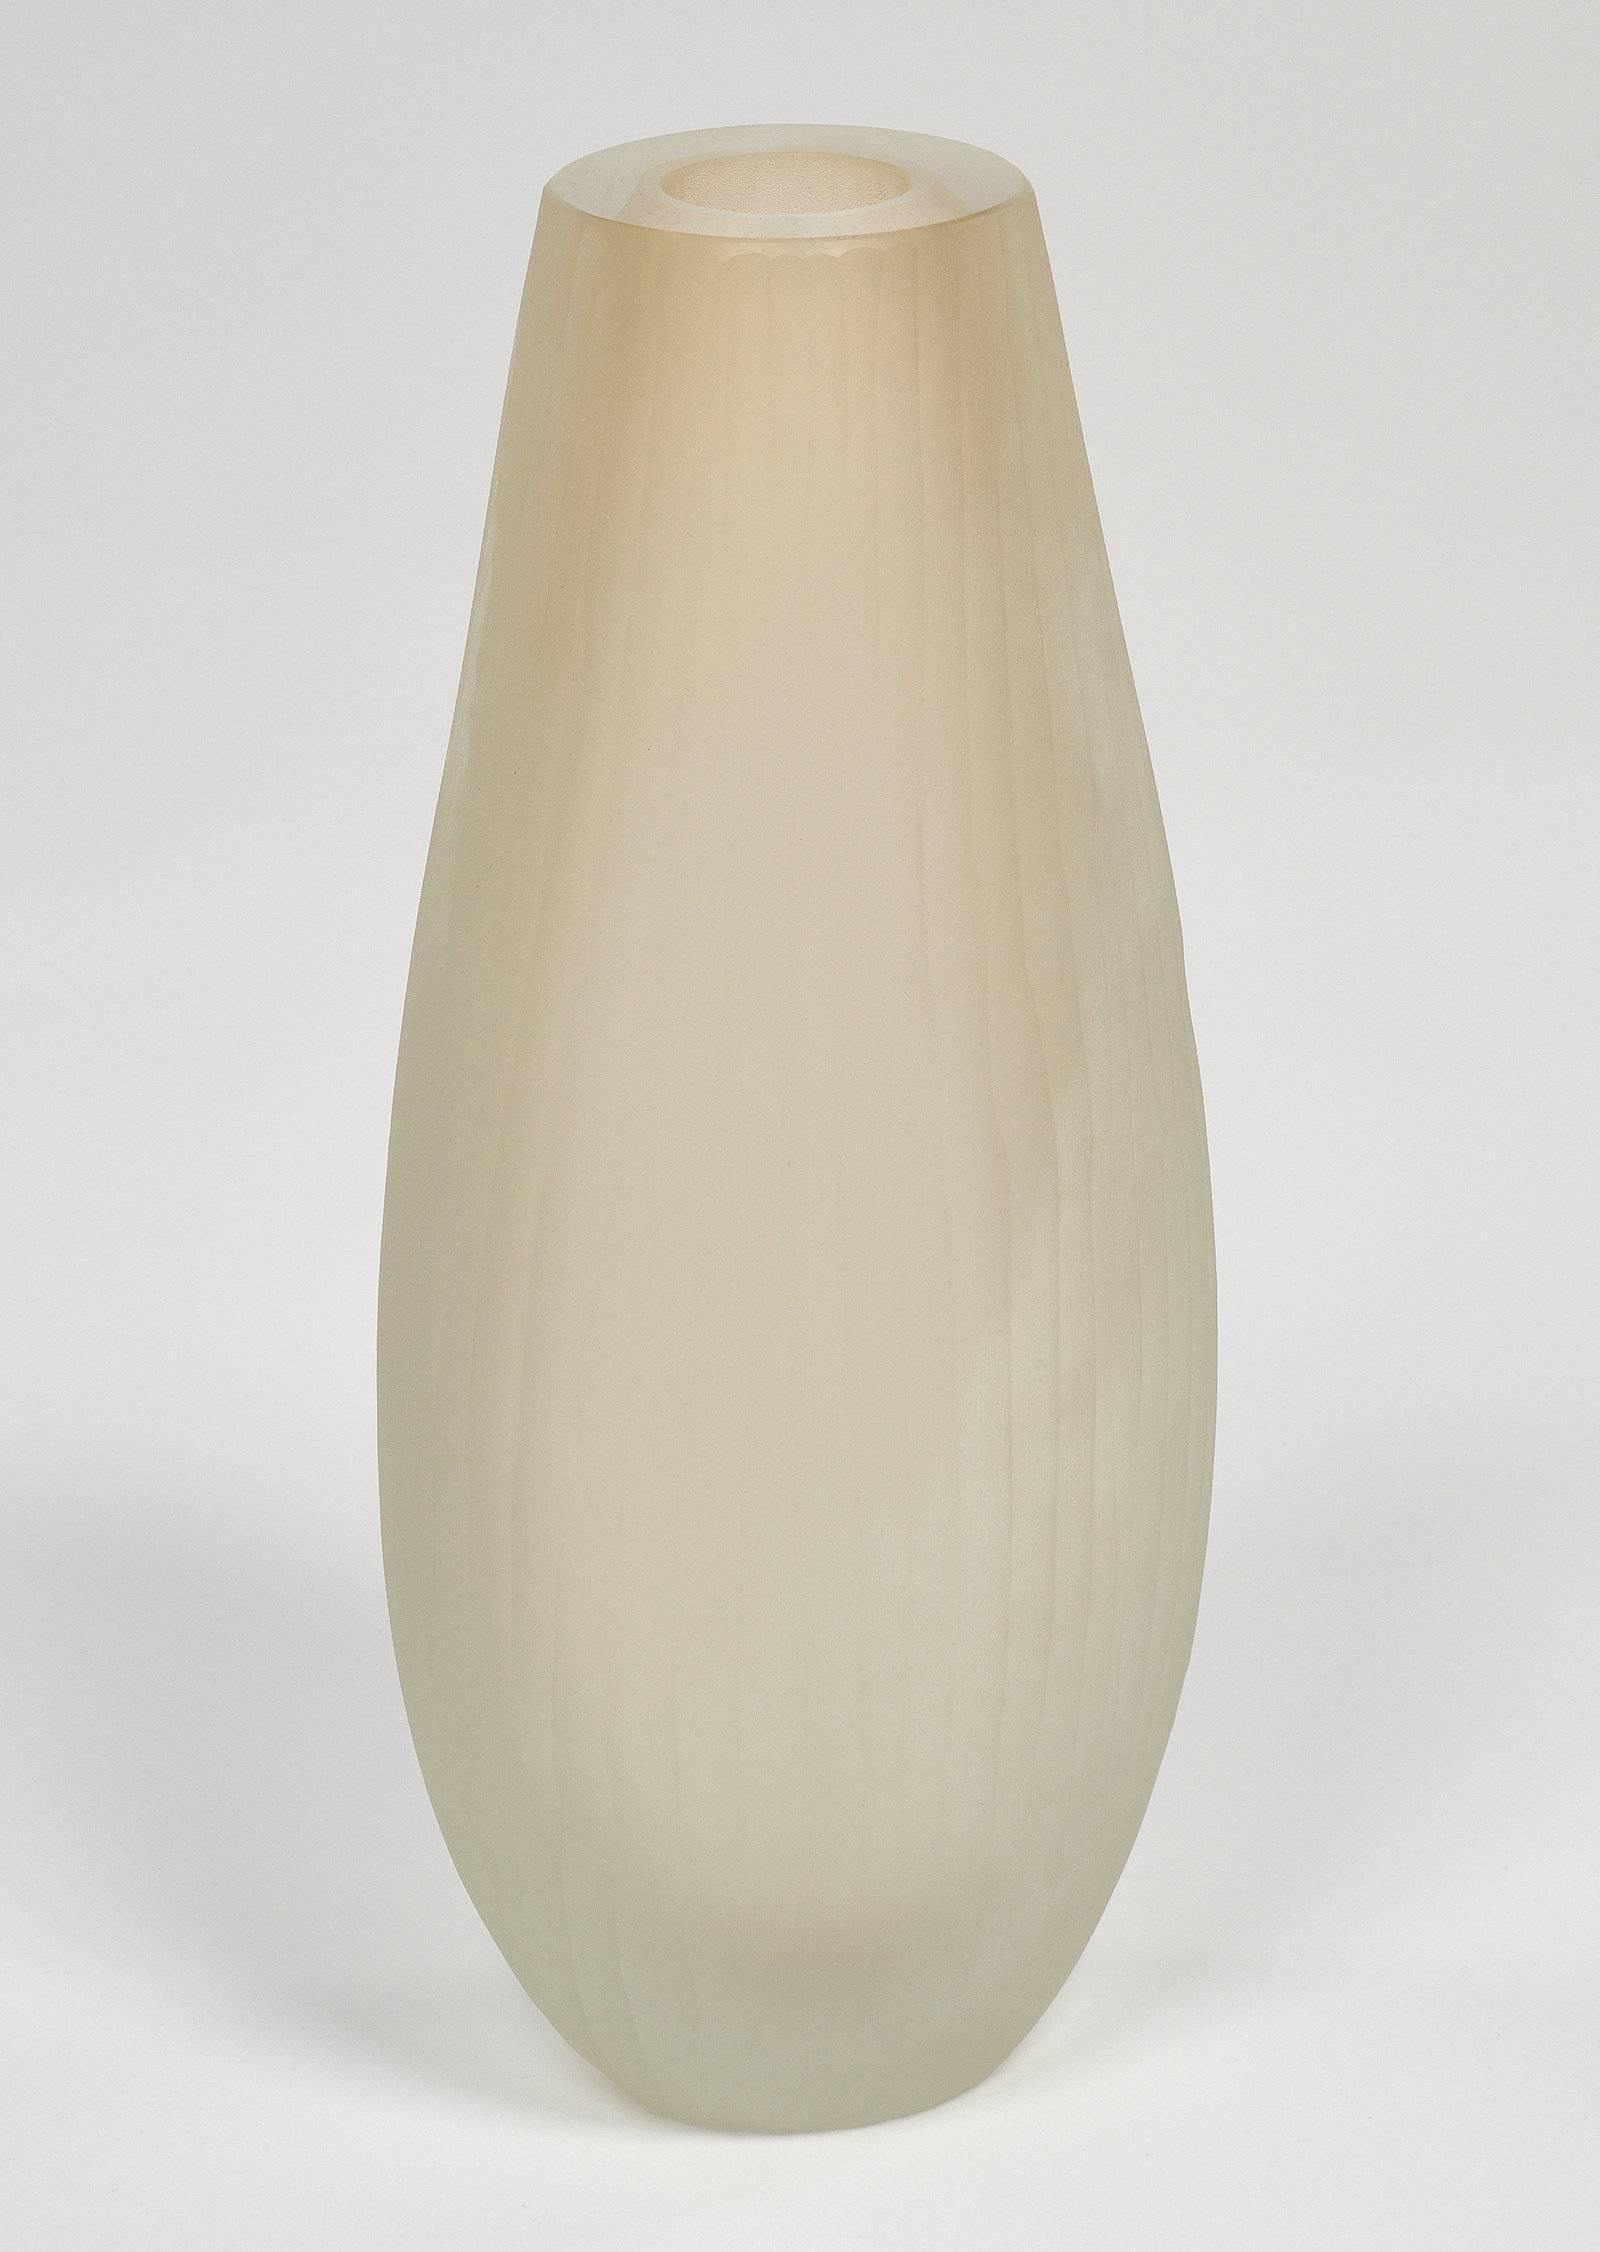 Contemporary Three Murano Glass Vases in the Tobia Scarpa Style